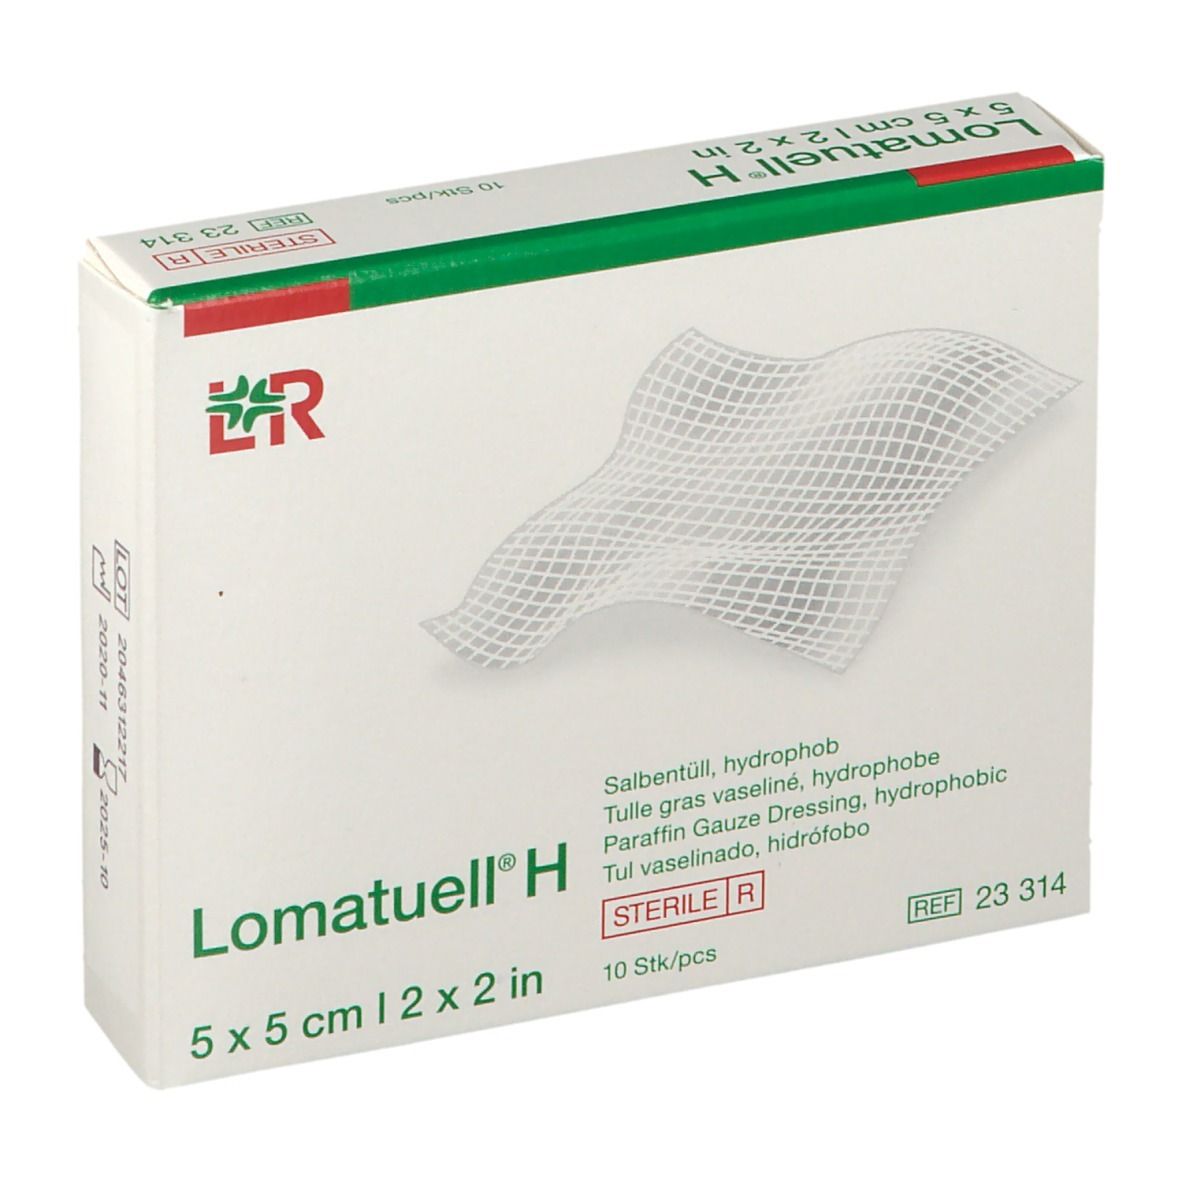 Lomatuell® H 5 cm x 5 cm steril